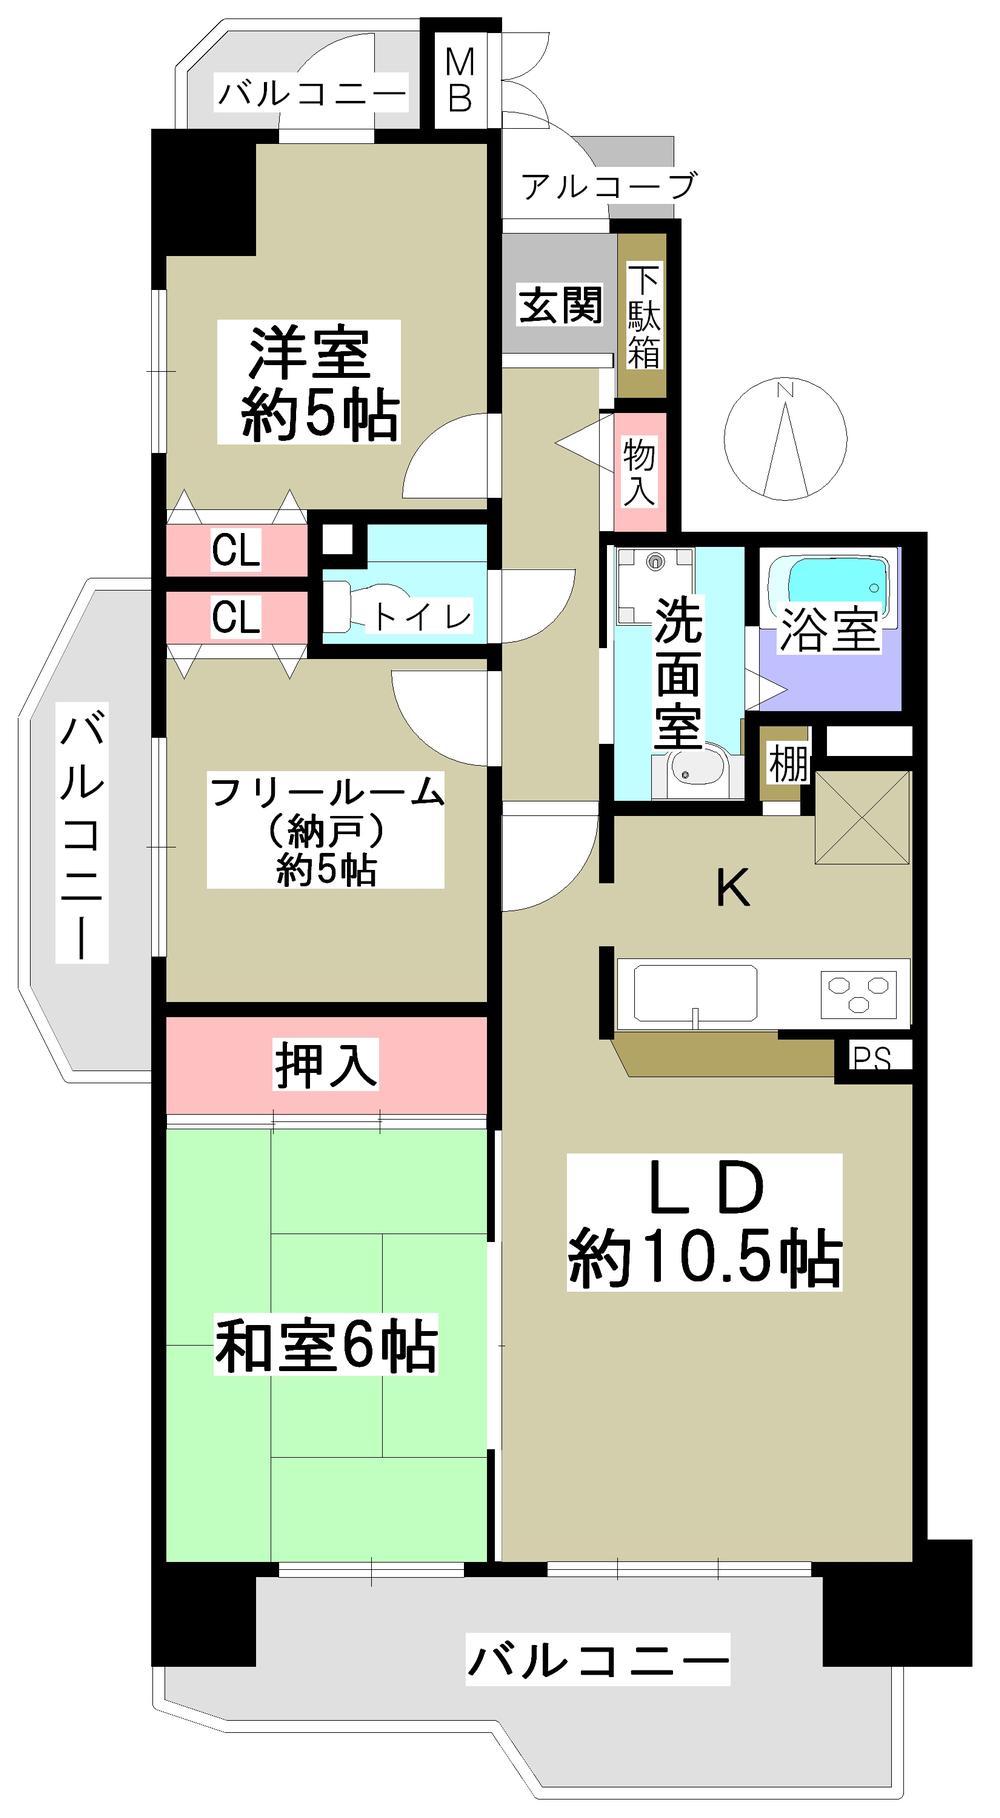 Floor plan. 2LDK + S (storeroom), Price 14.8 million yen, Occupied area 65.88 sq m , Three-sided balcony All rooms have storage space have a balcony area 16.58 sq m southwest angle room